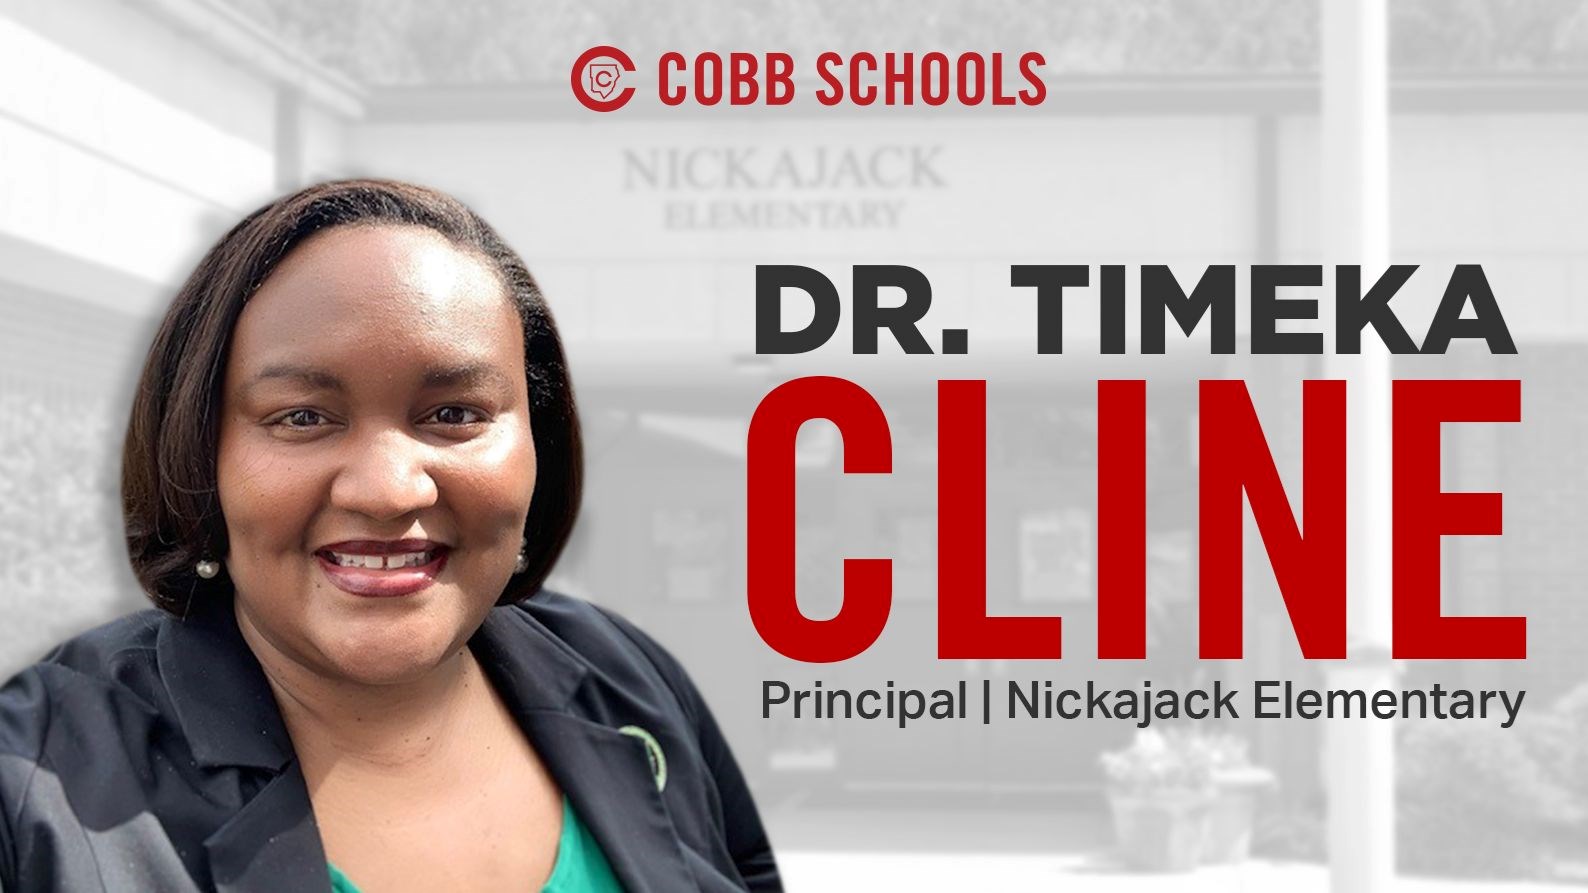 Dr. Timeka Cline will serve as principal at Nickajack Elementary School